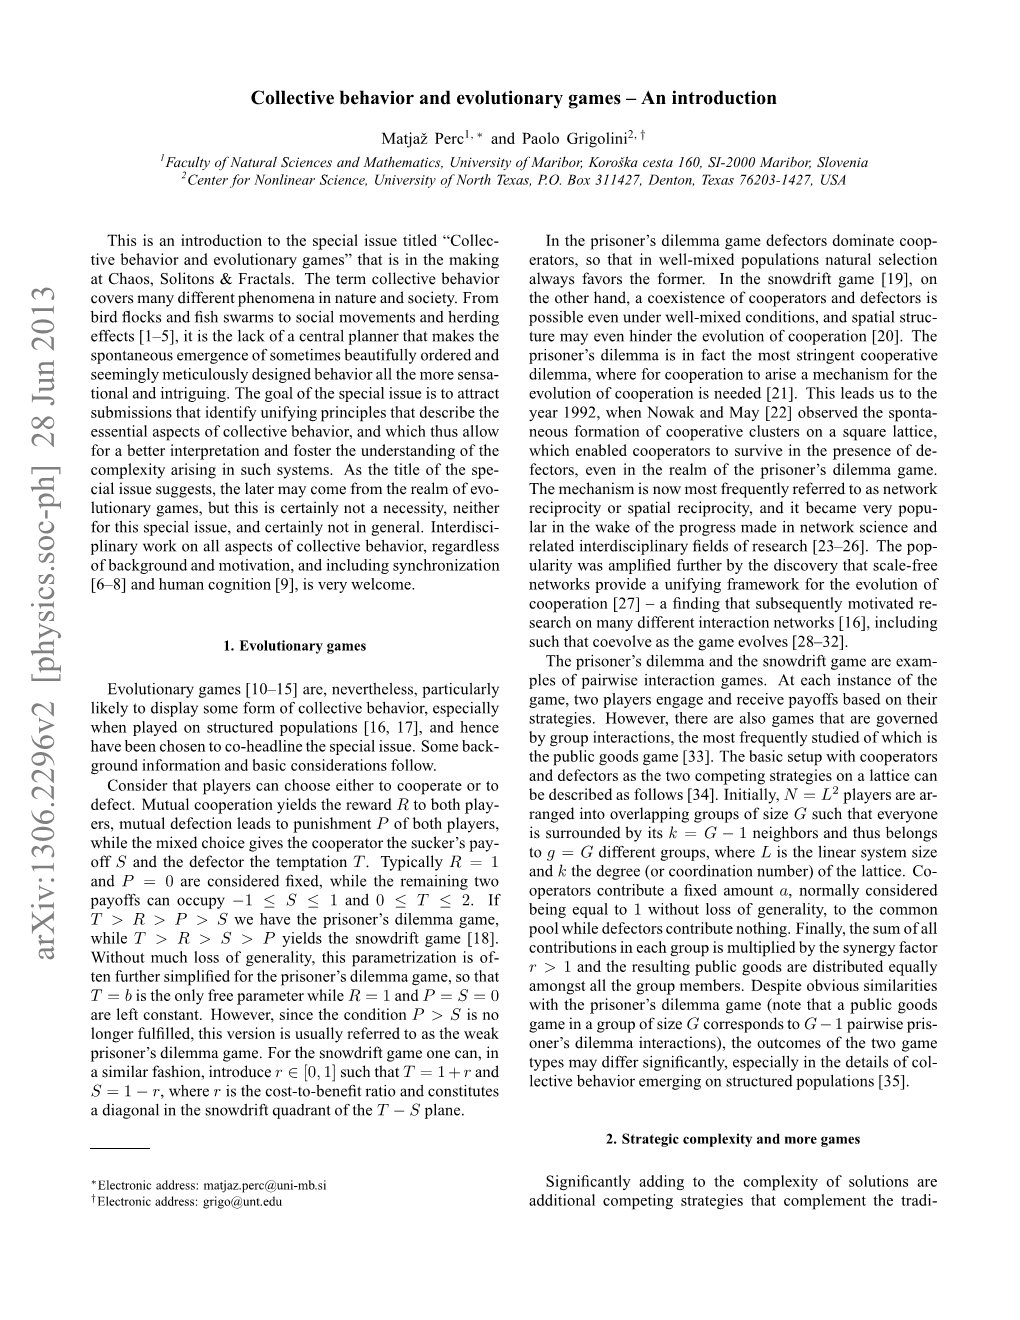 Arxiv:1306.2296V2 [Physics.Soc-Ph] 28 Jun 2013 Eet Uulcoeainyed H Reward the Yields Cooperation Mutual Defect